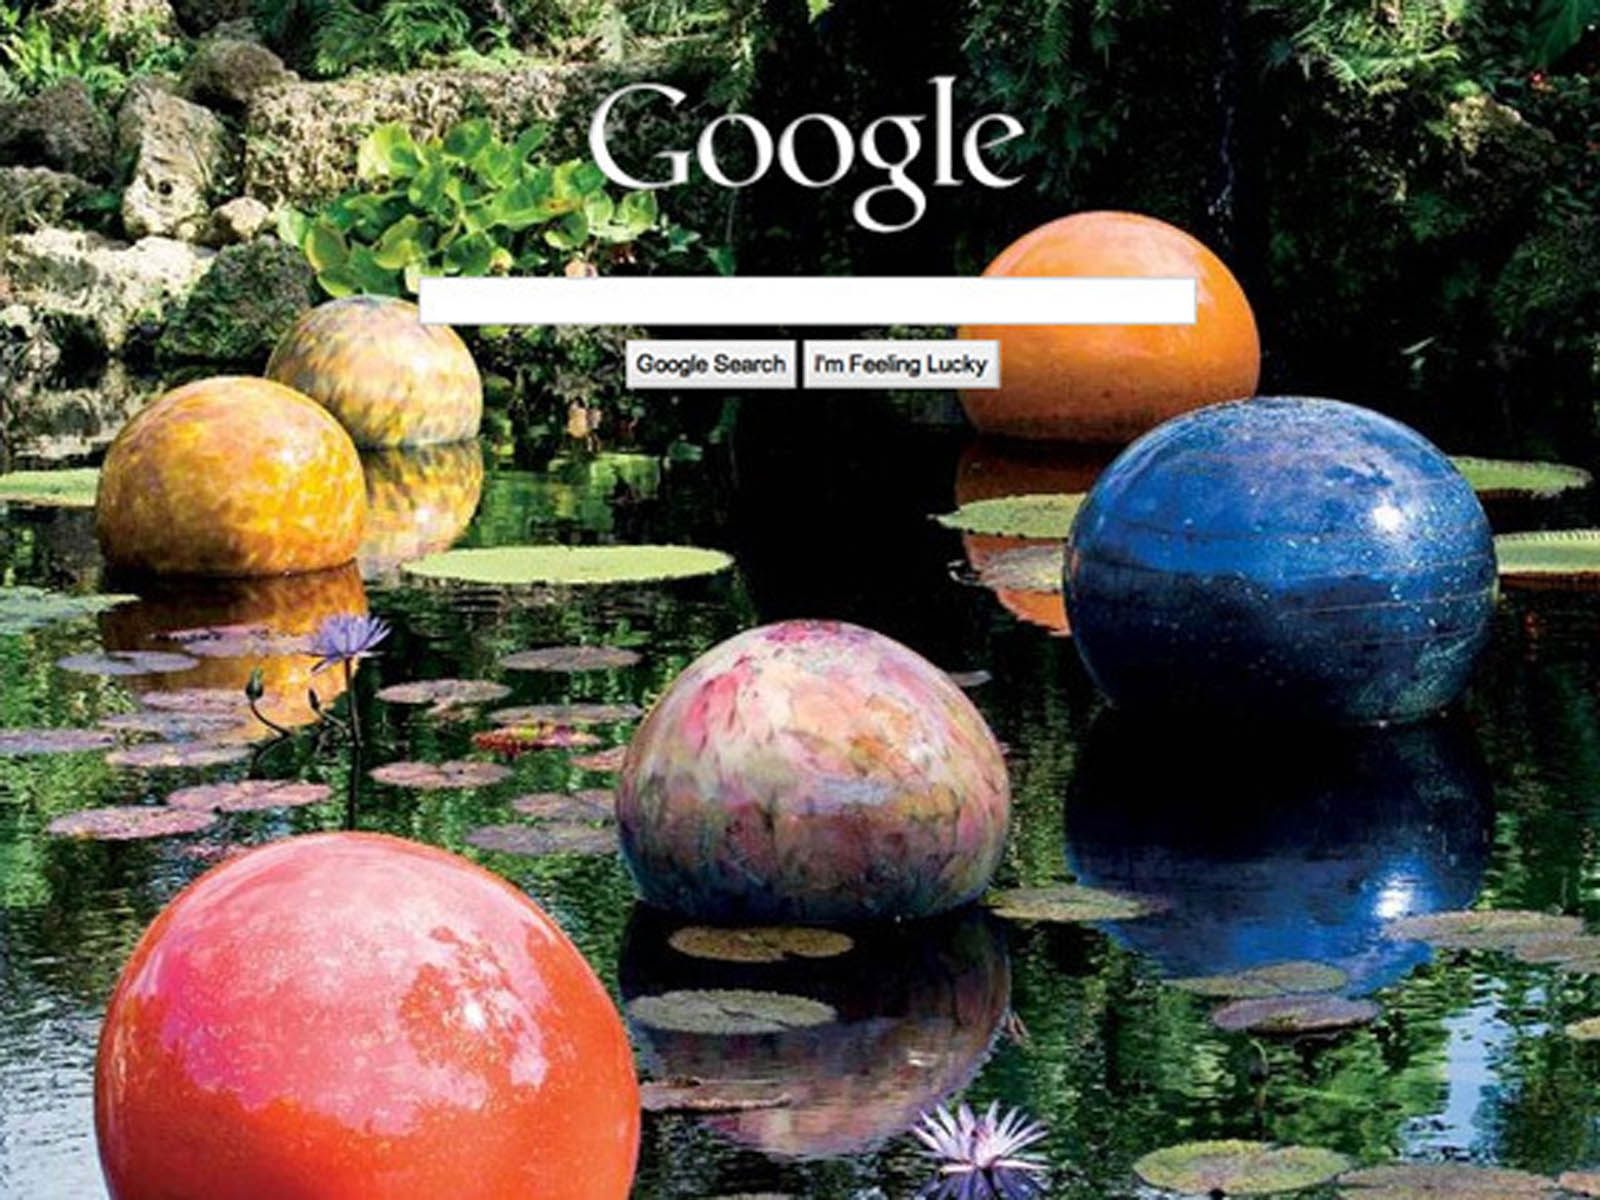  Google Desktop Wallpapers Google Desktop Backgrounds Images 1600x1200